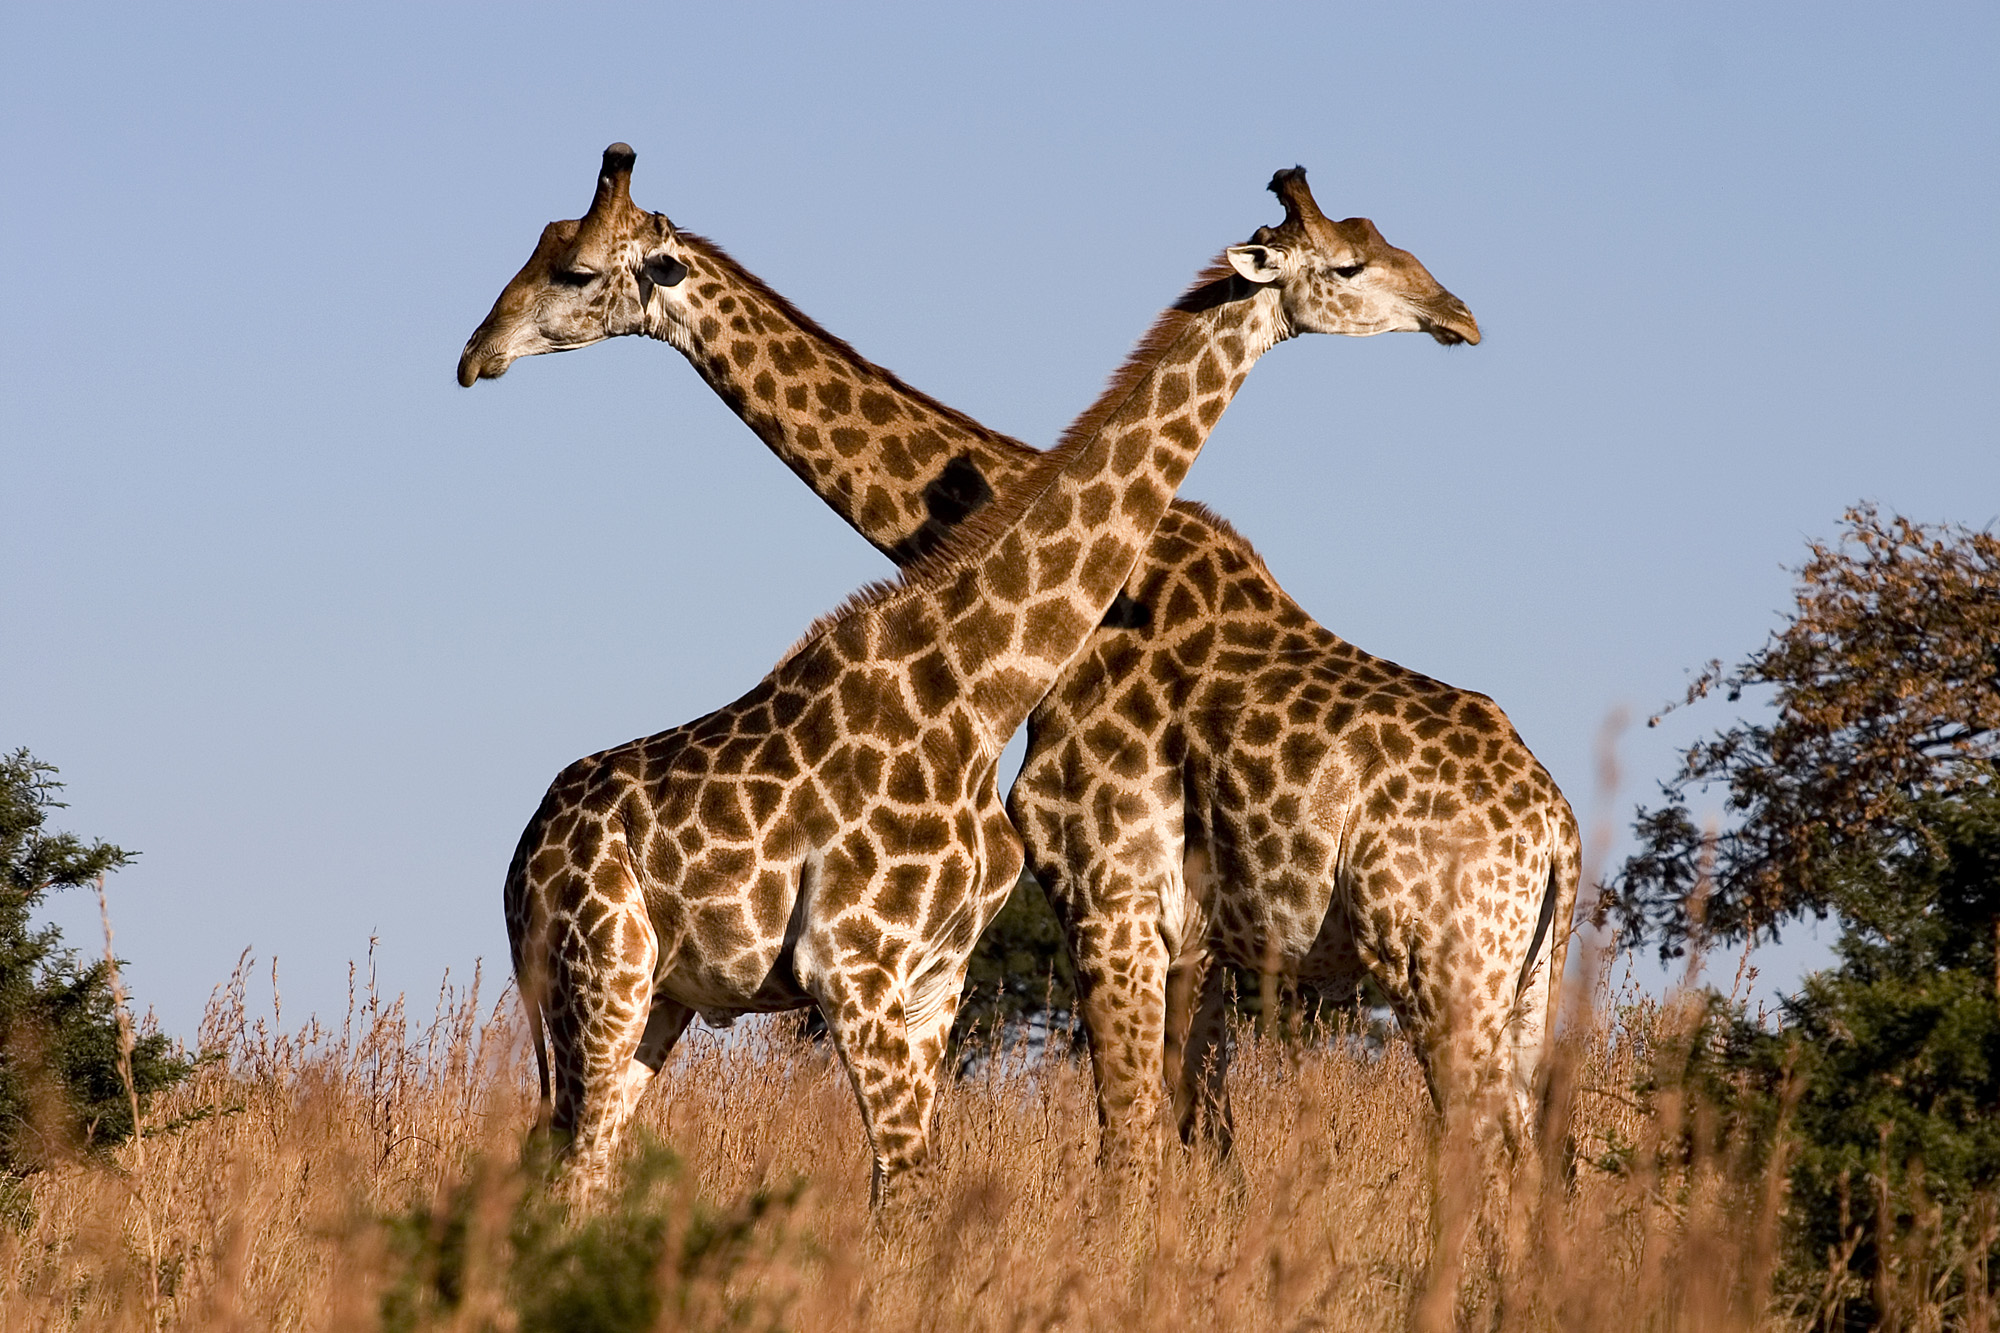 Male giraffes will engage in necking to establish dominance.